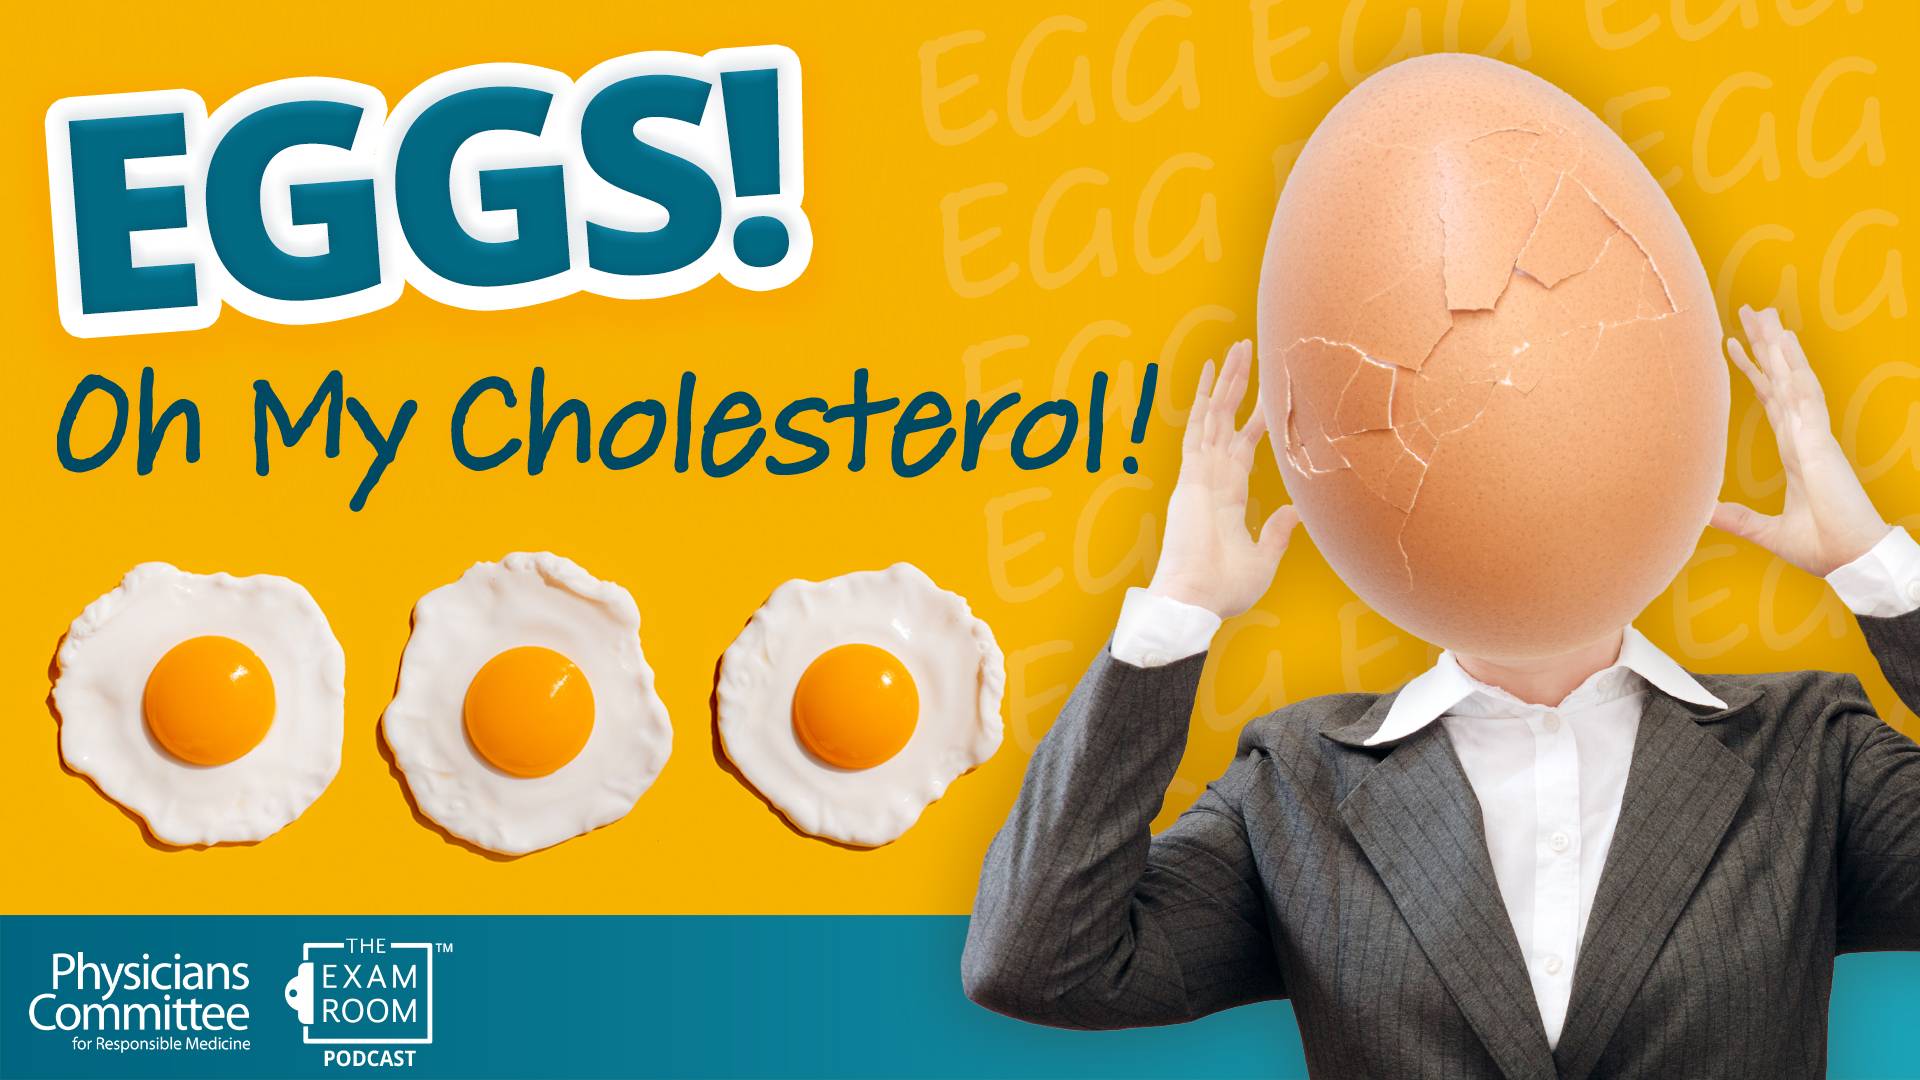 Oh My Cholesterol! Eggs!